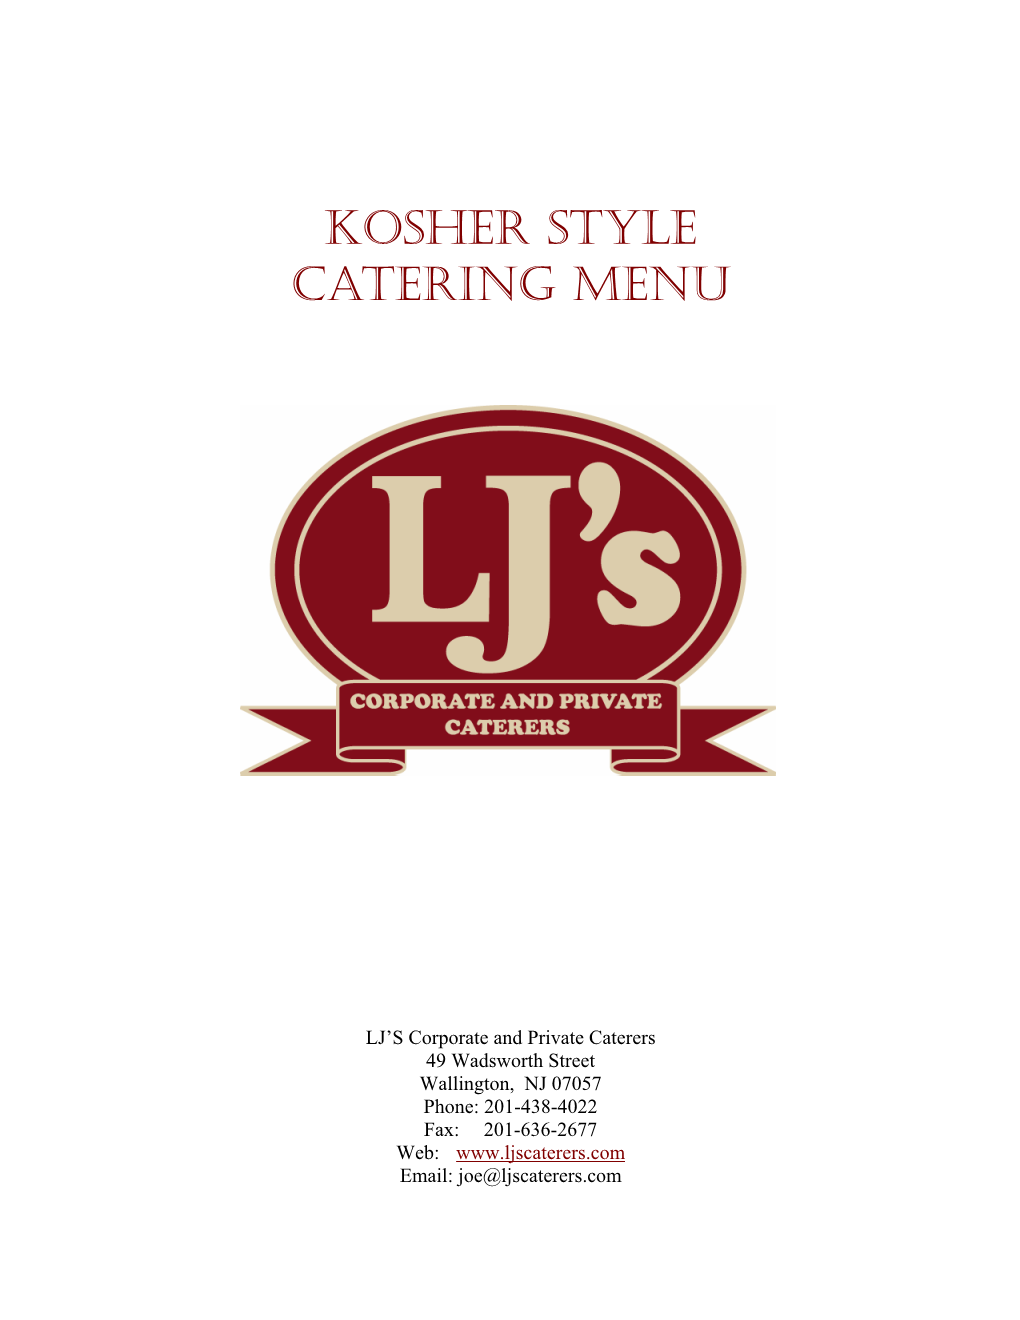 Kosher Style Catering Menu